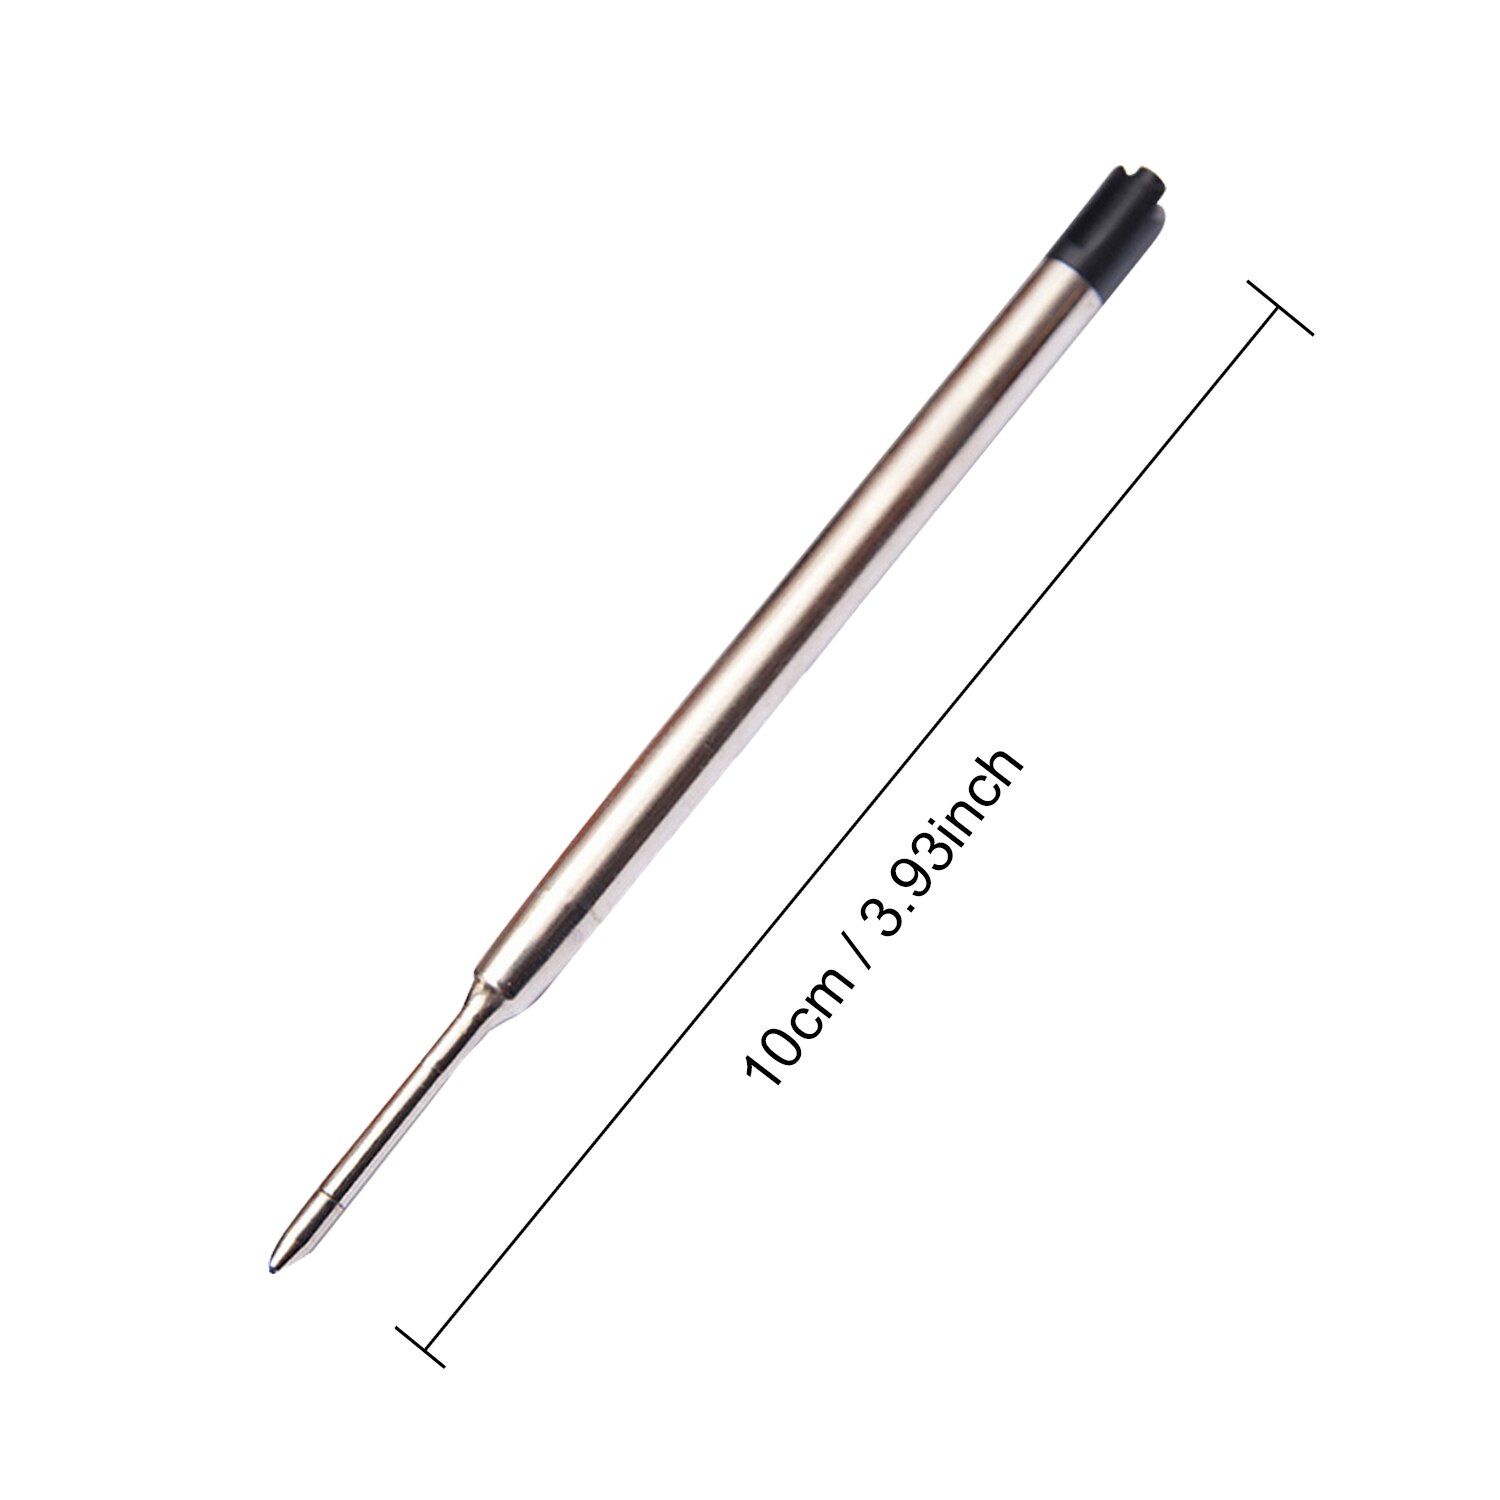 6 stk. kuglepen, mellempunktspennefyldning, genopfyldning til parkerpenne skolekontorartikler 0.7mm